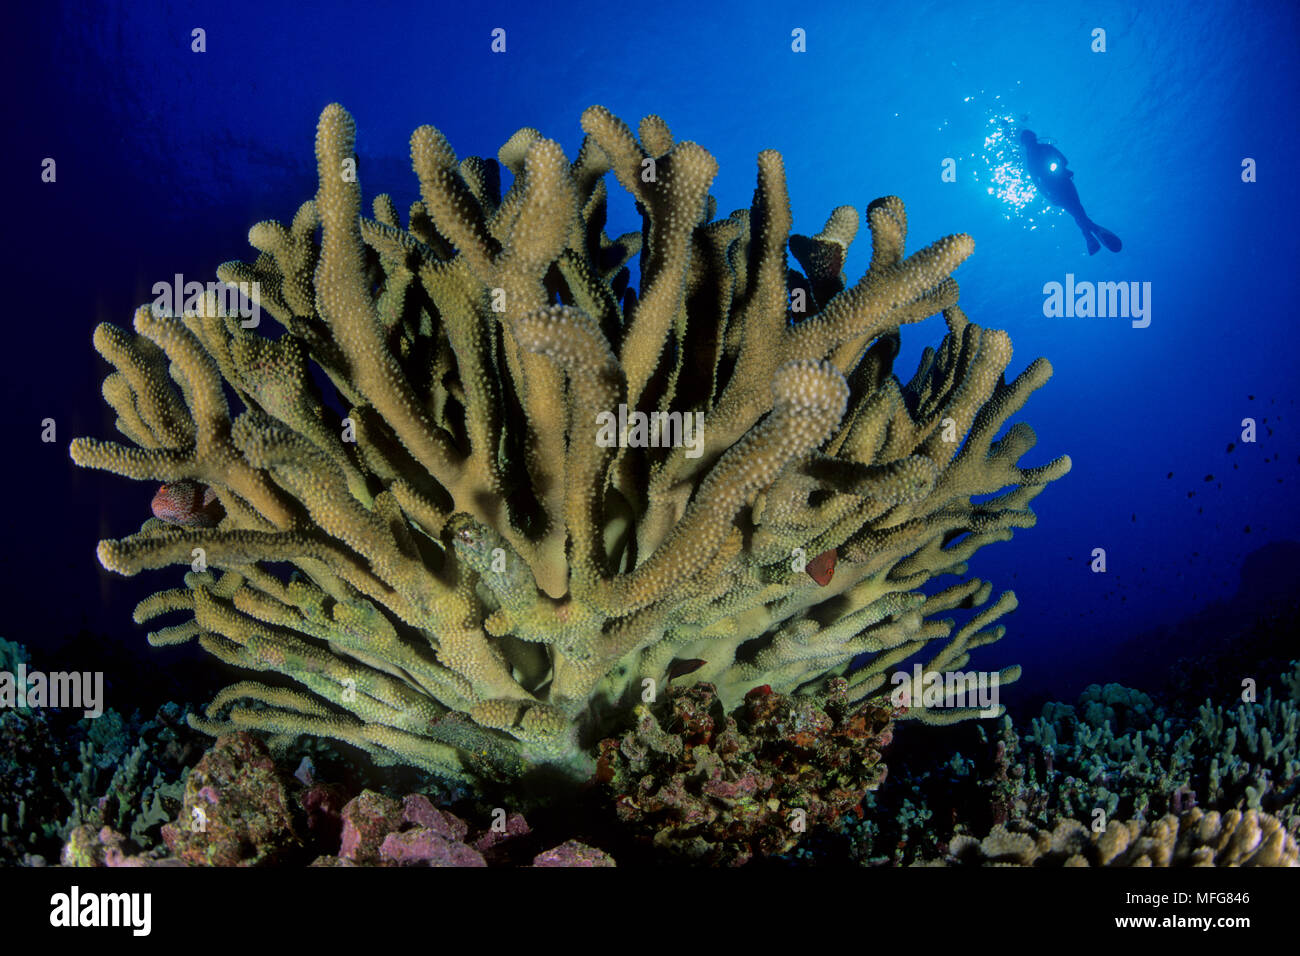 Scuba diver and antler coral, Pocillopora eydouxi, Kona, Big Island, Hawaii, Pacific Ocean  Date: 23.07.08  Ref: ZB777 117125 0003  COMPULSORY CREDIT: Stock Photo